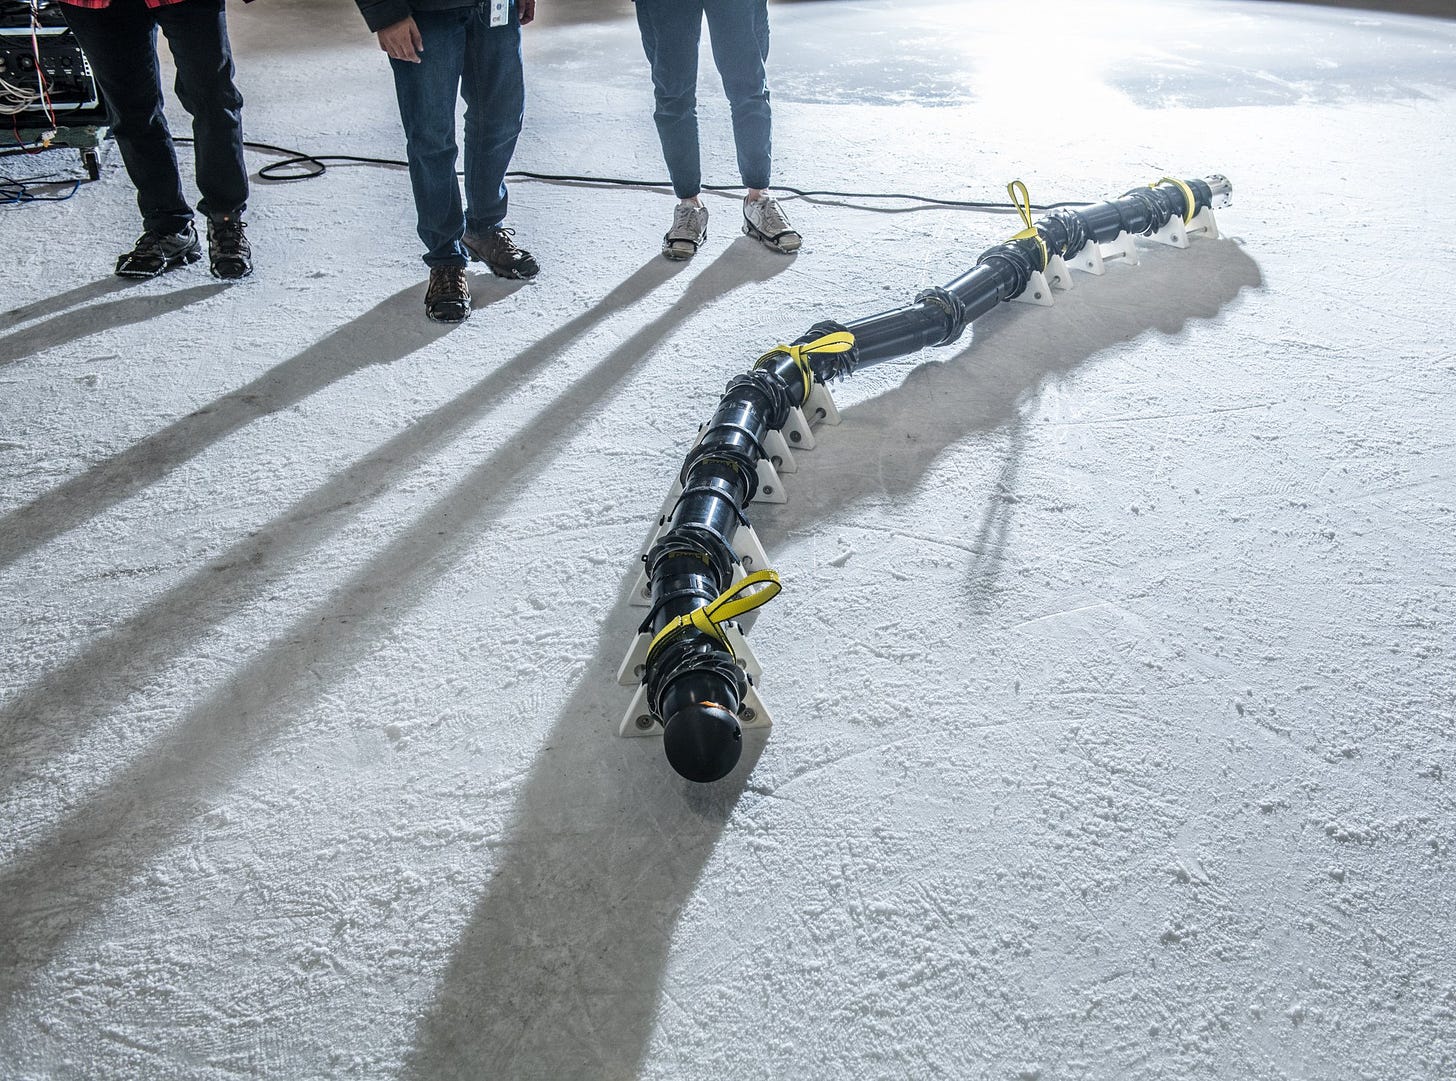 The first EELS prototype awaits testing at the Pasadena Ice Rink. Credit NASA/JPL-CalTech